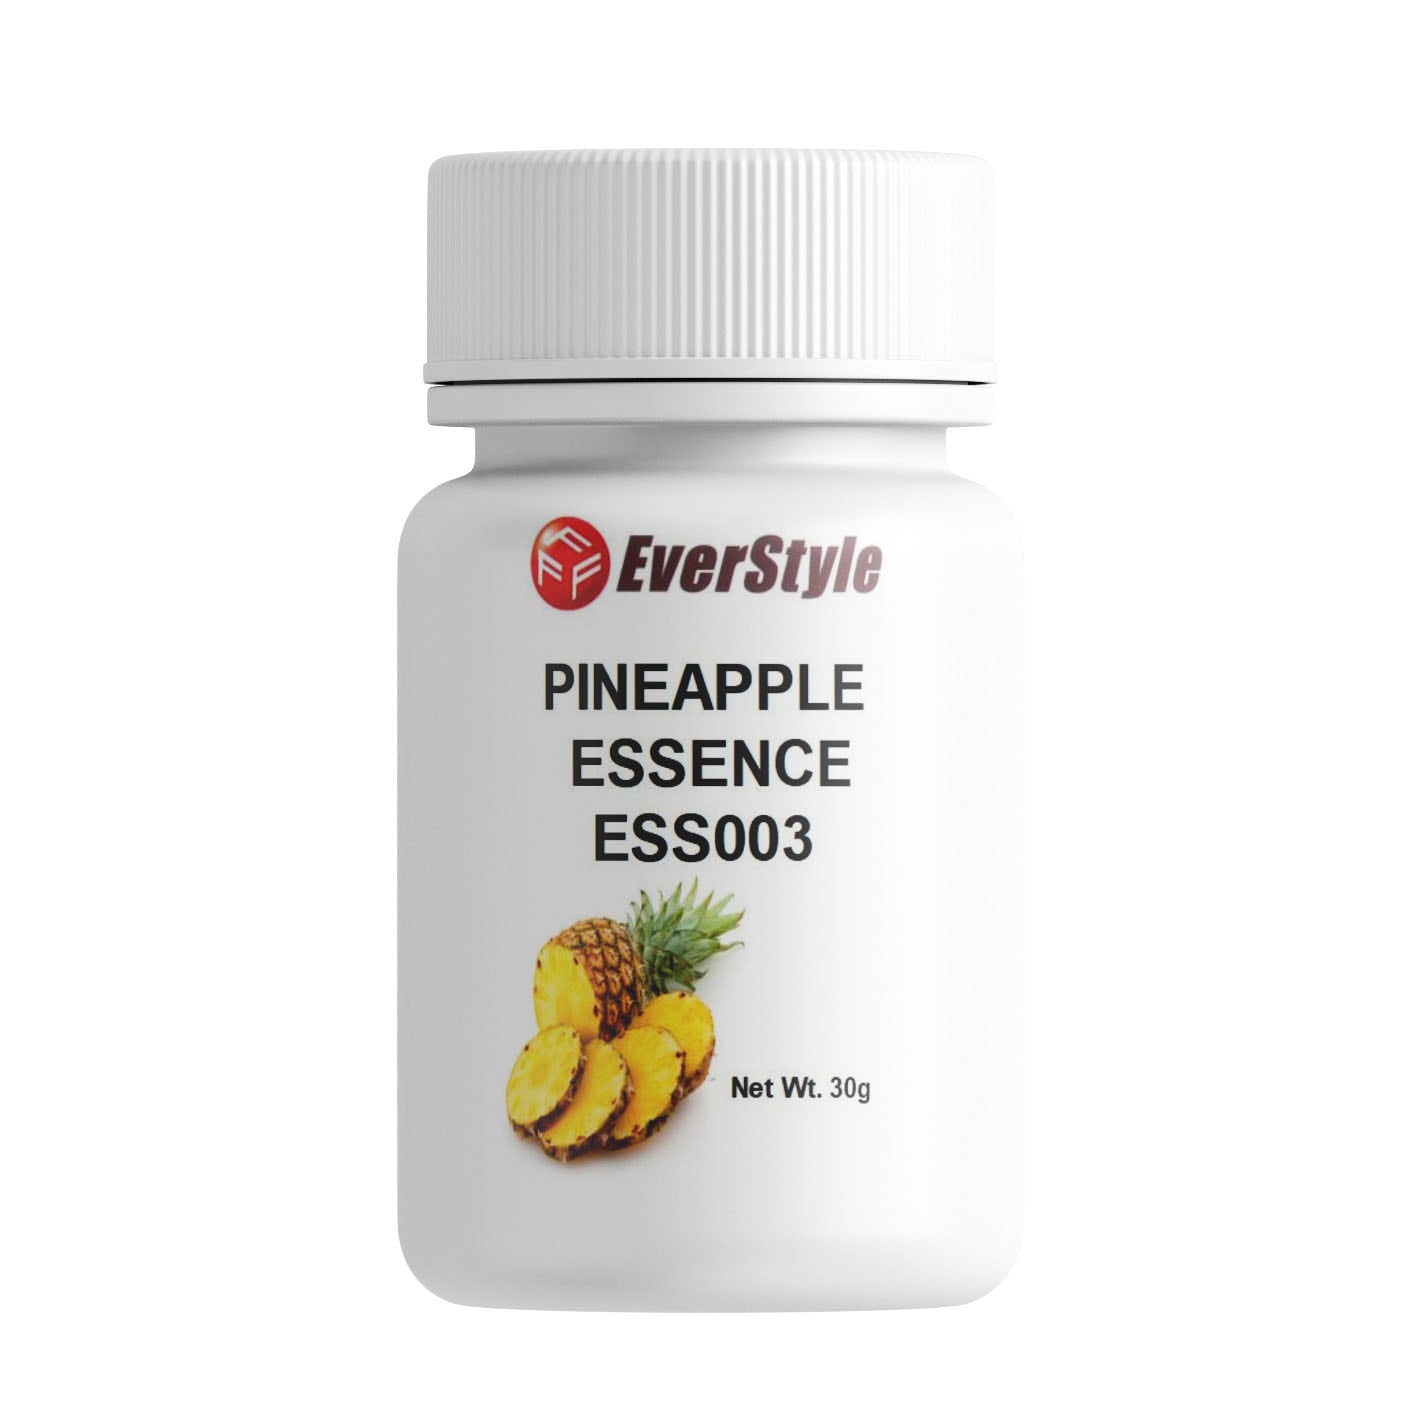 Everstyle Pineapple Essence 30g (ESS003)